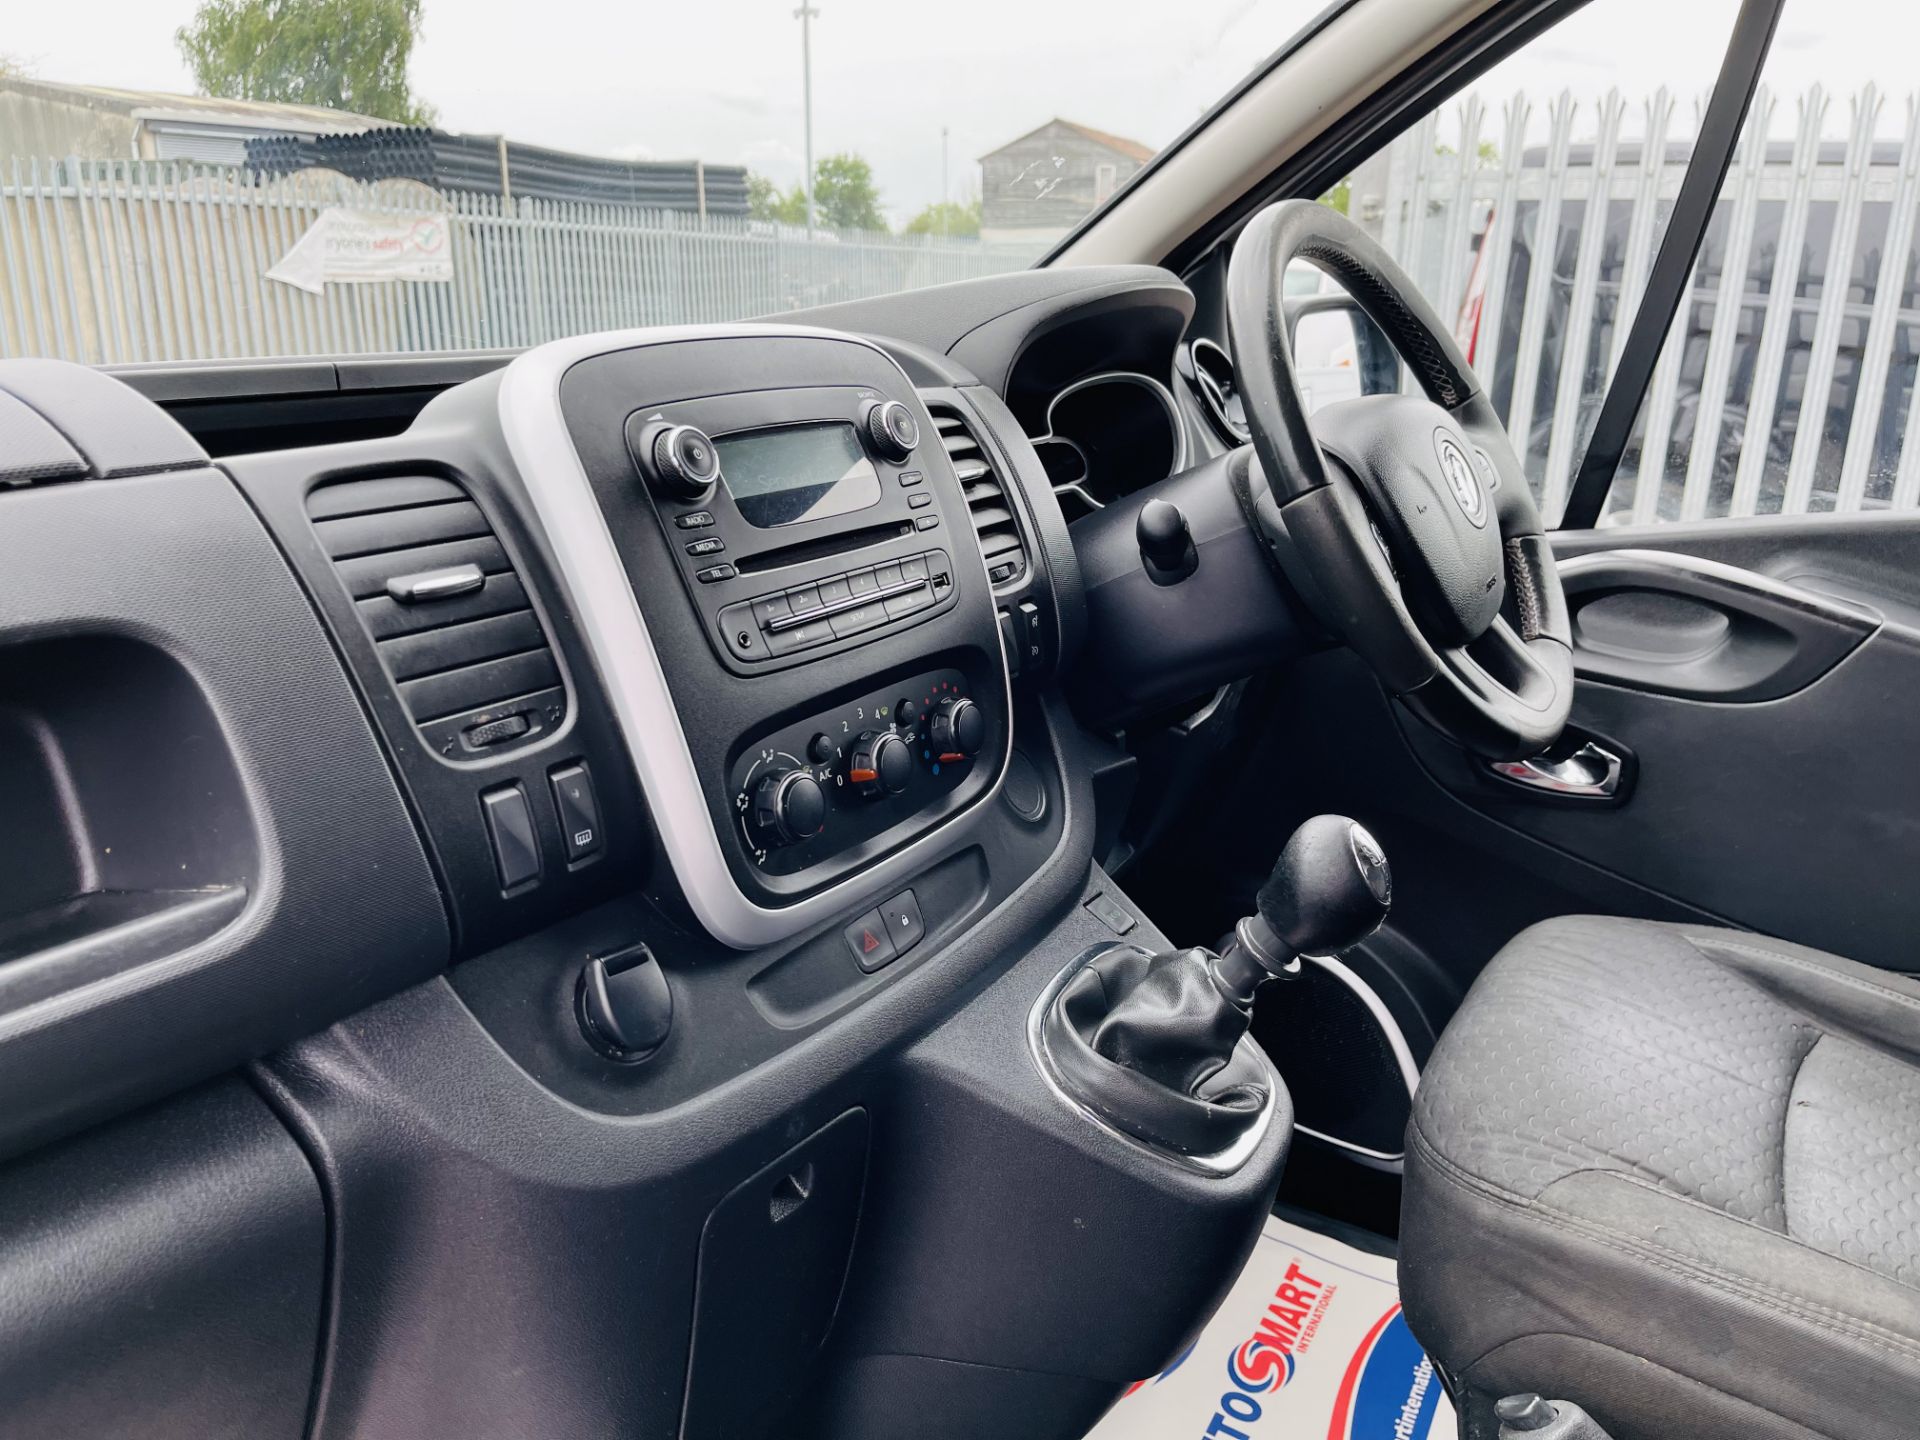 Vauxhall Vivaro 1.6 CDTI Sportive 2700 L1 H1 2015 '65 Reg' Air con - Elec Pack *NO VAT SAVE 20% * - Image 15 of 16